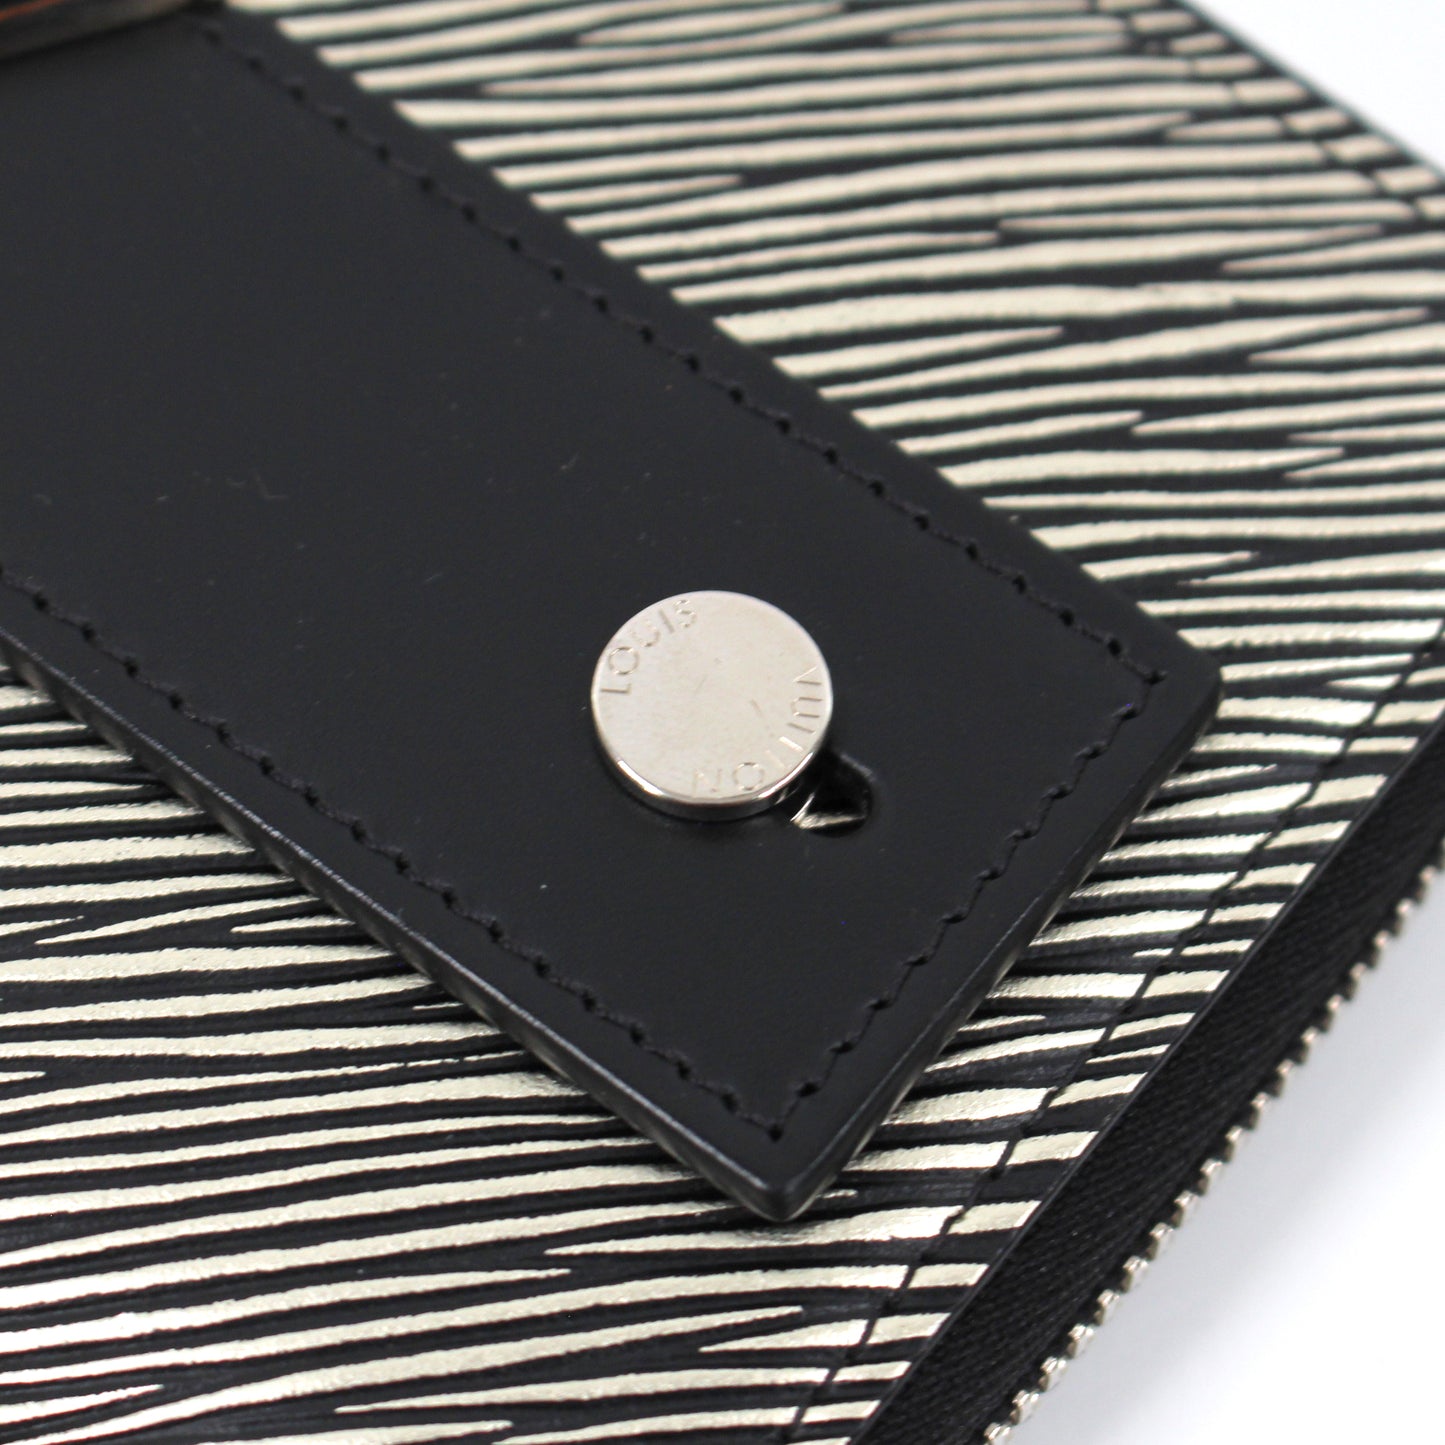 Louis Vuitton Zippy Wallet V Epi Leather